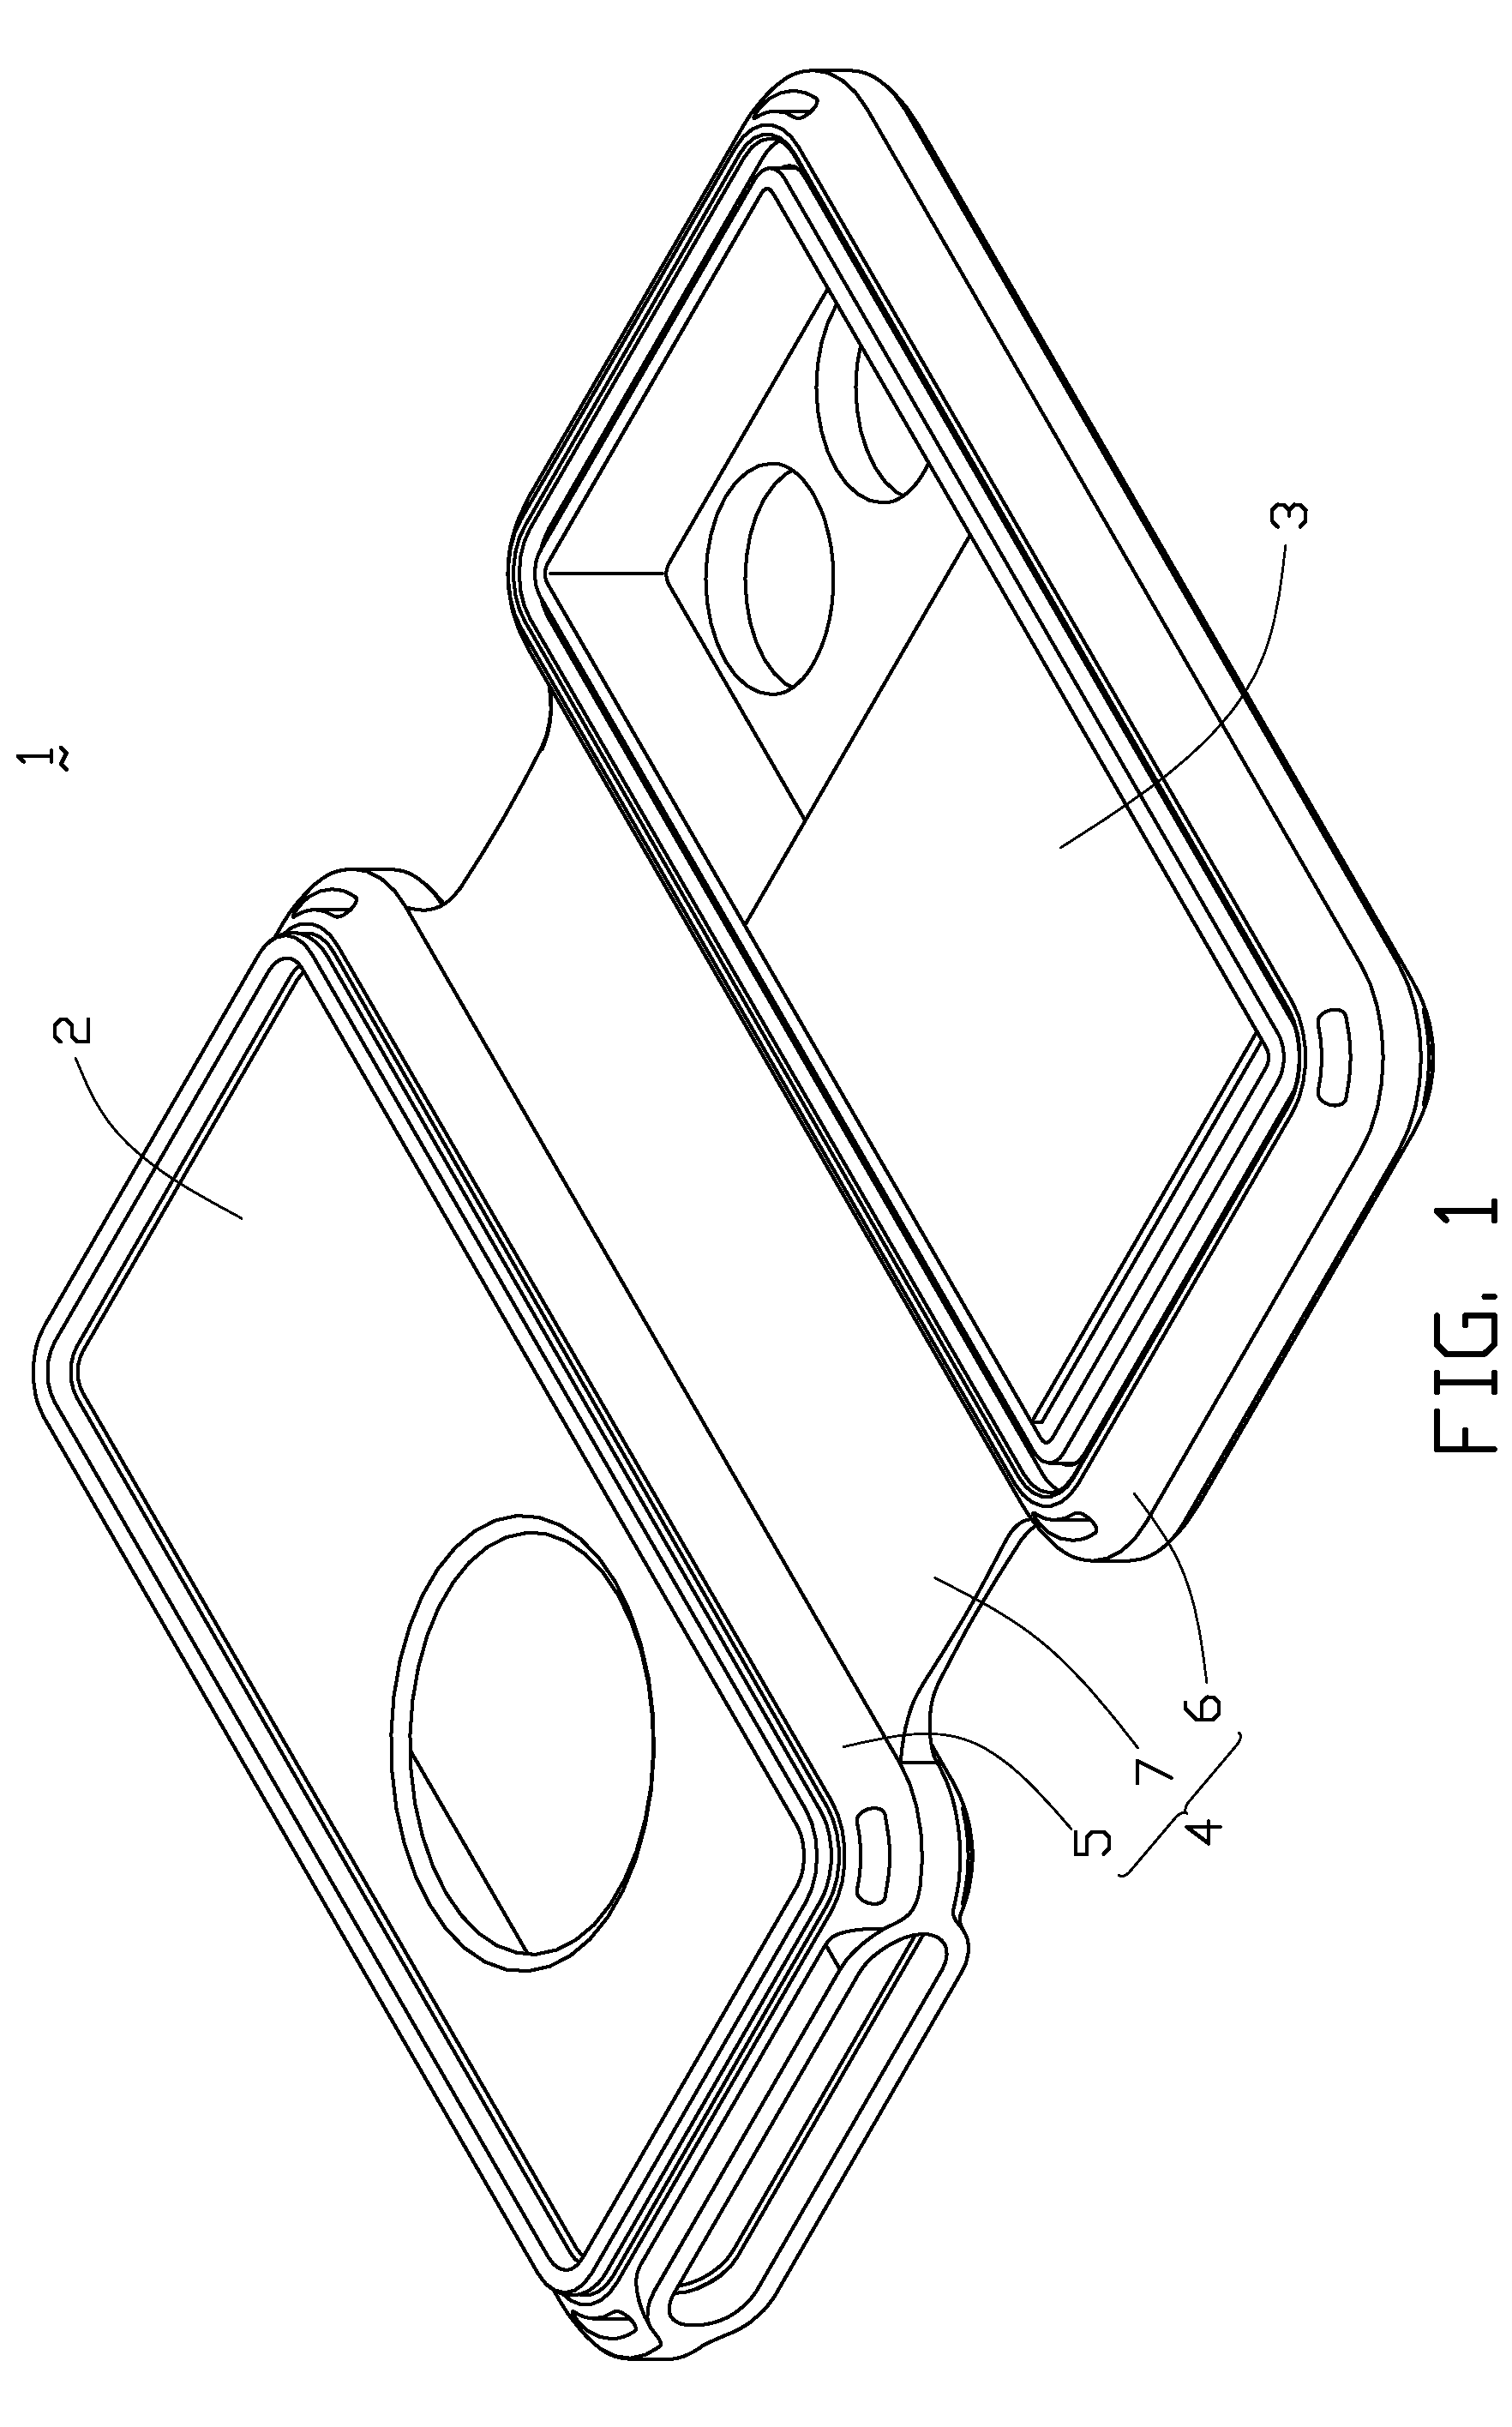 Protective apparatus for a portable device